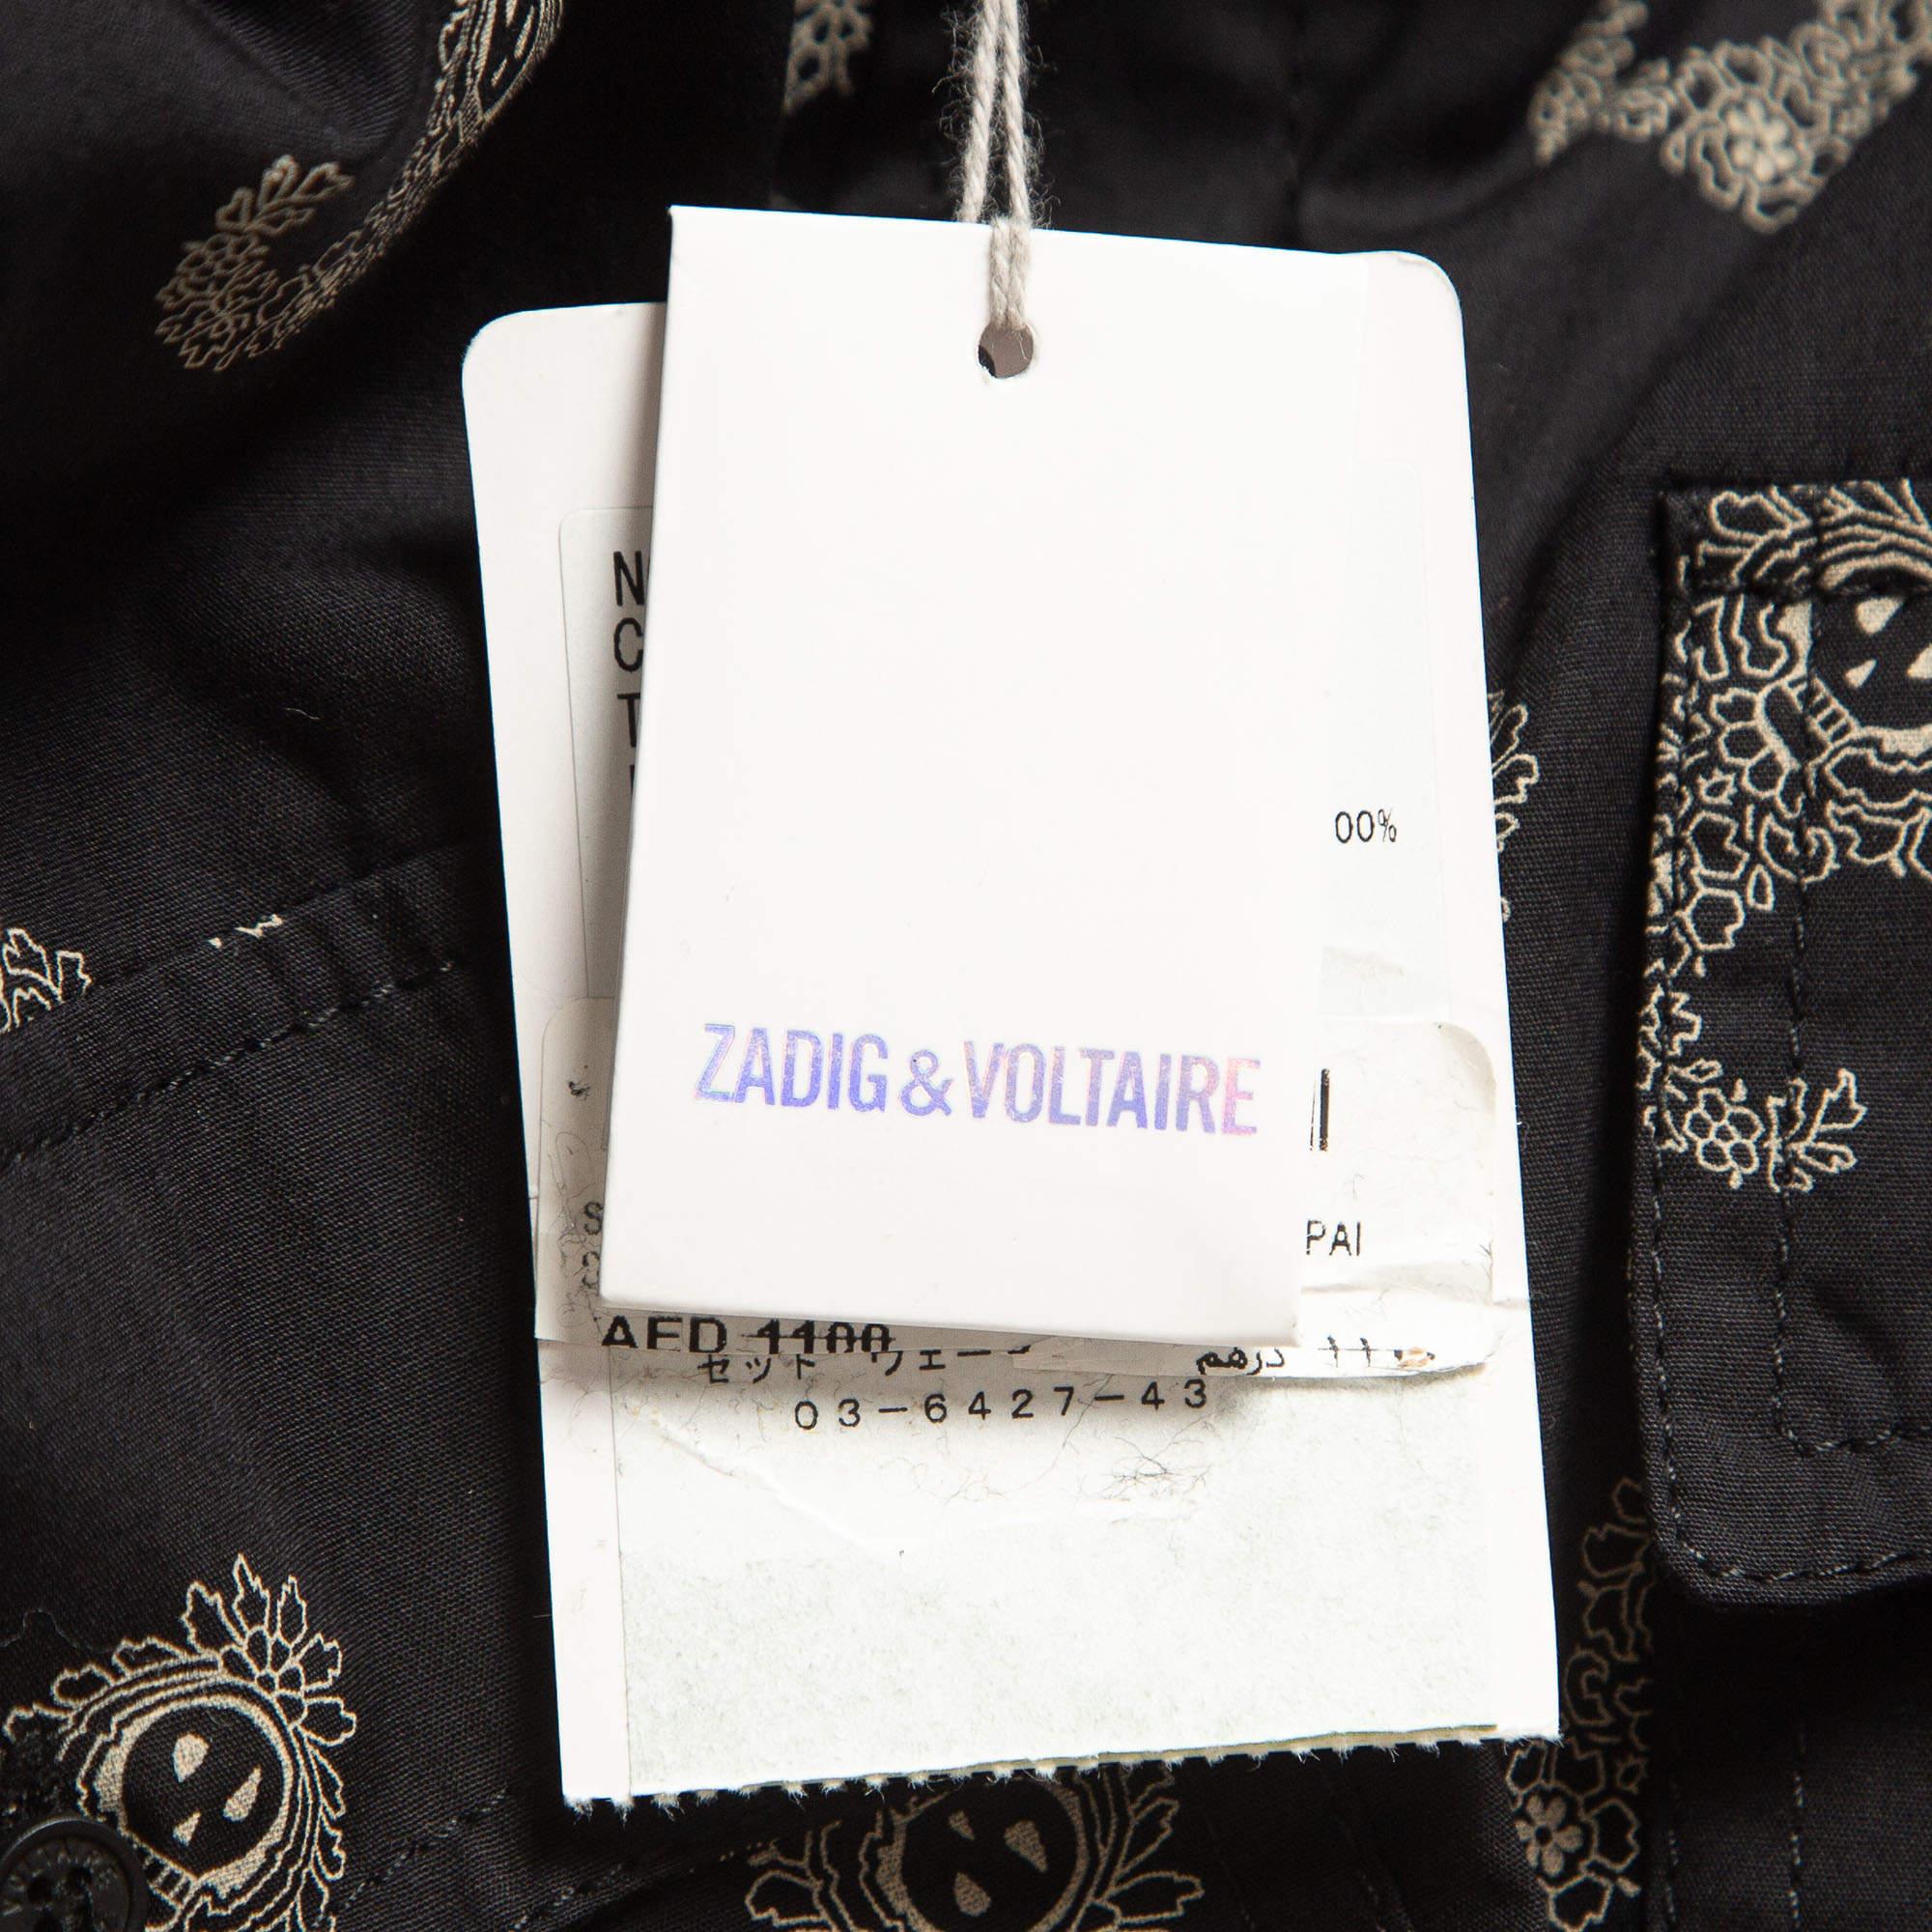 Zadig & Voltaire Black Tamara Paisley Print Cotton Shirt XS 1